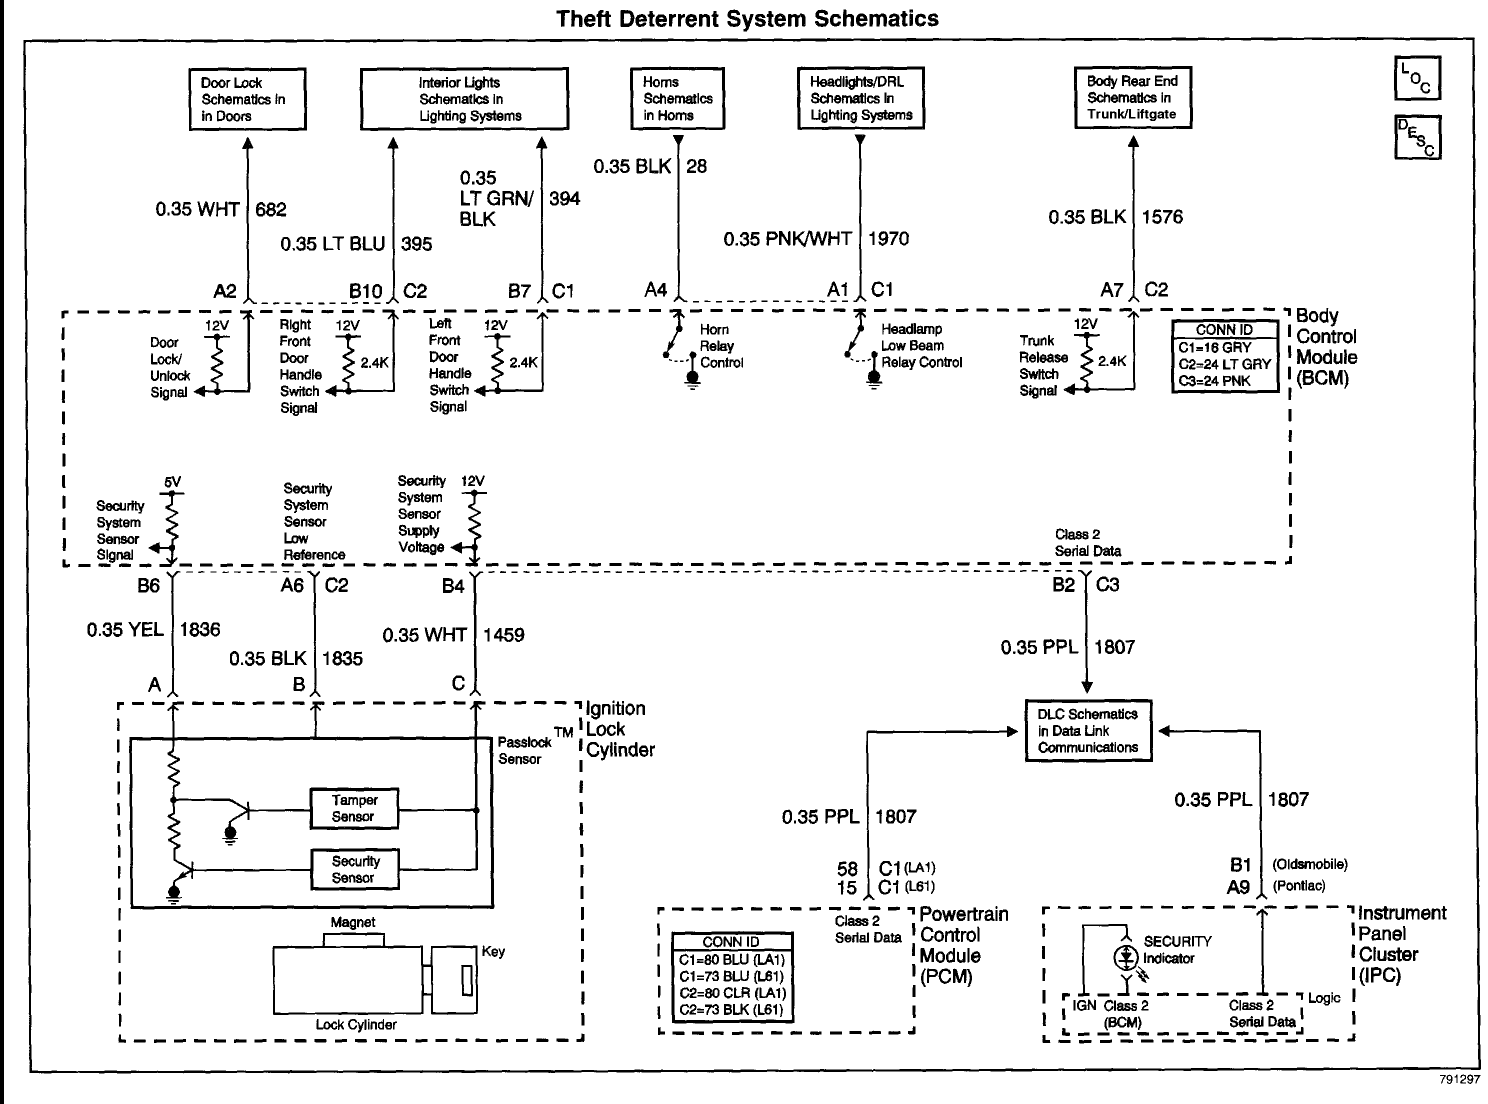 wiring diagram for passlock 2 1999 chevy silverado